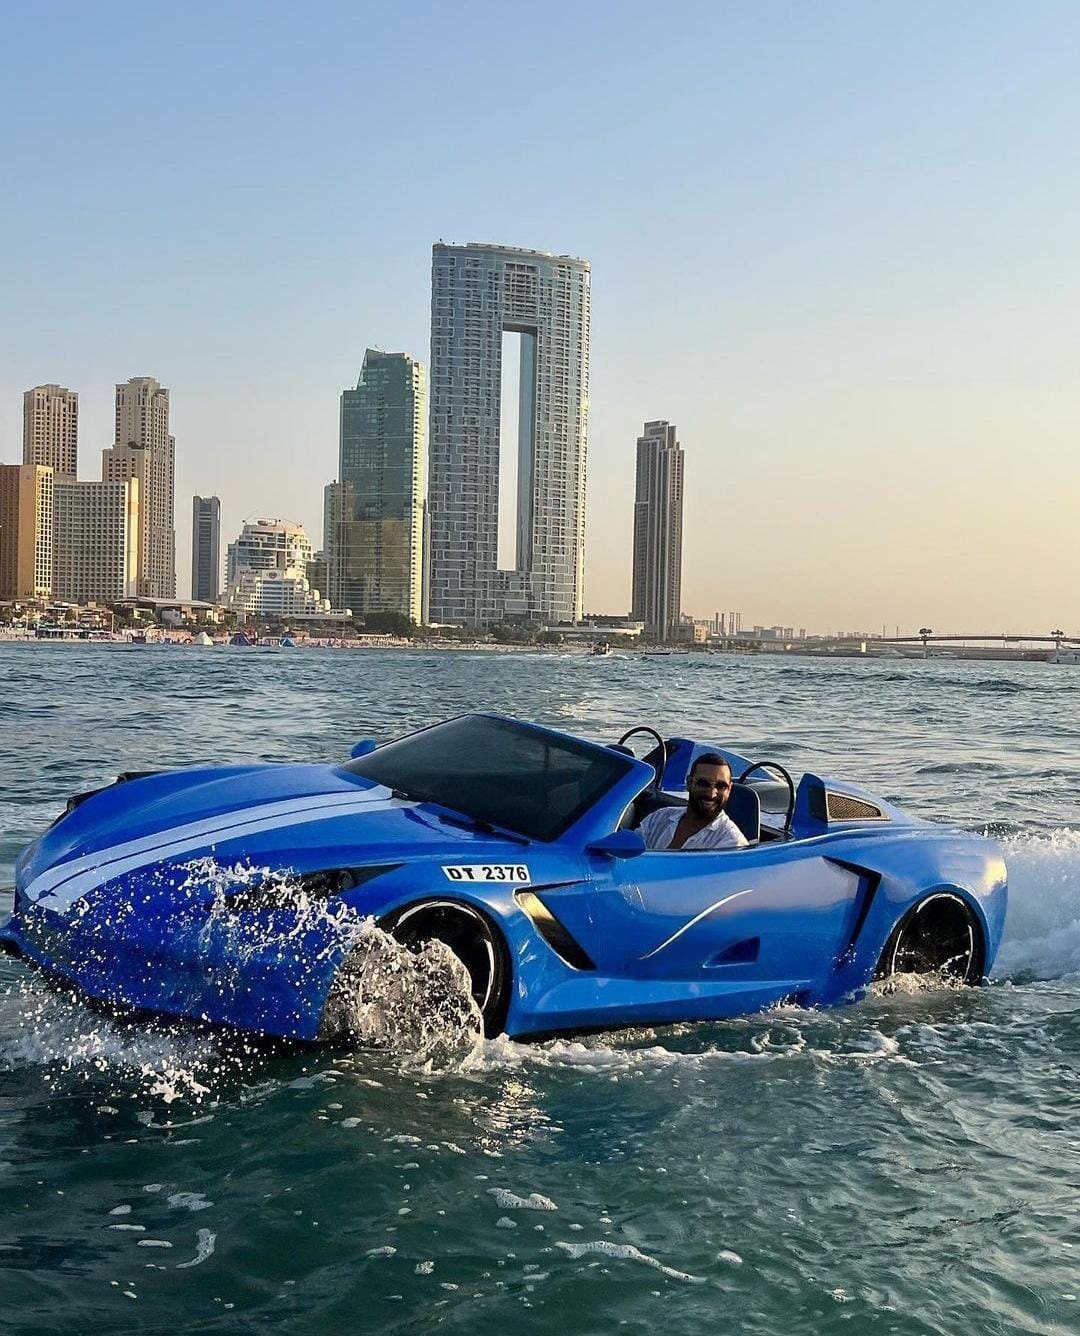 Dubai Water Car Rental: Luxury Meets Adventure at Sea